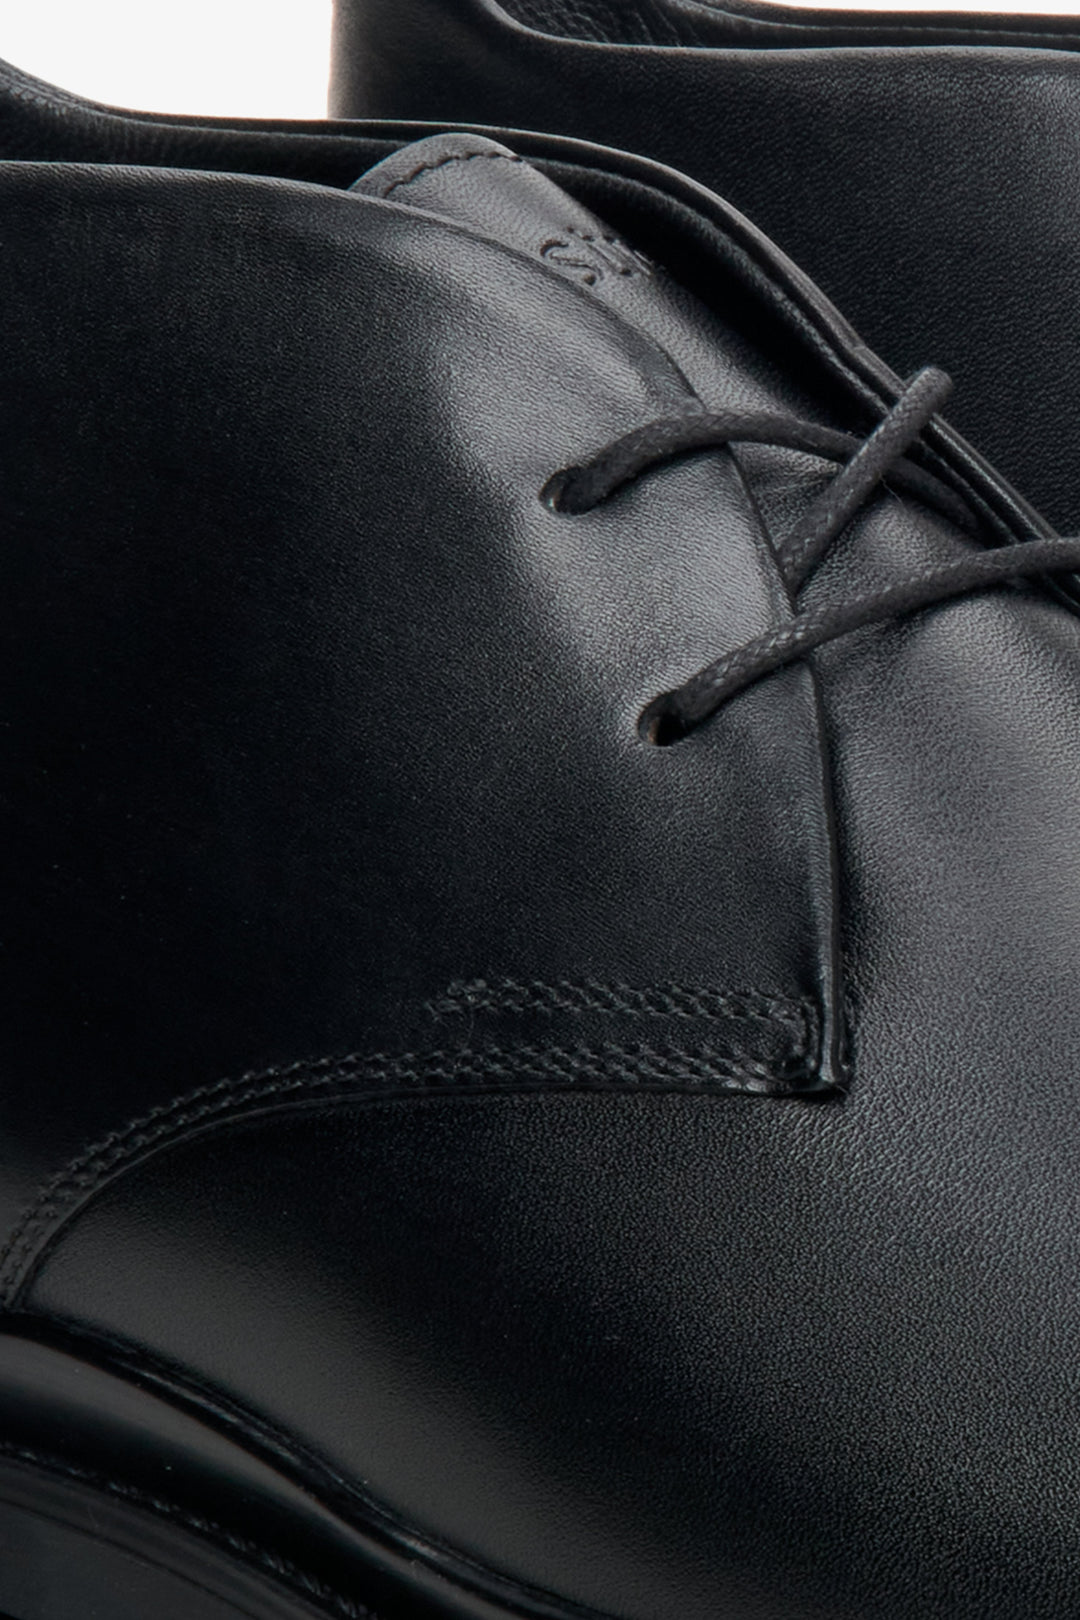 Men's black leather shoes by Estro - close-up on the details.